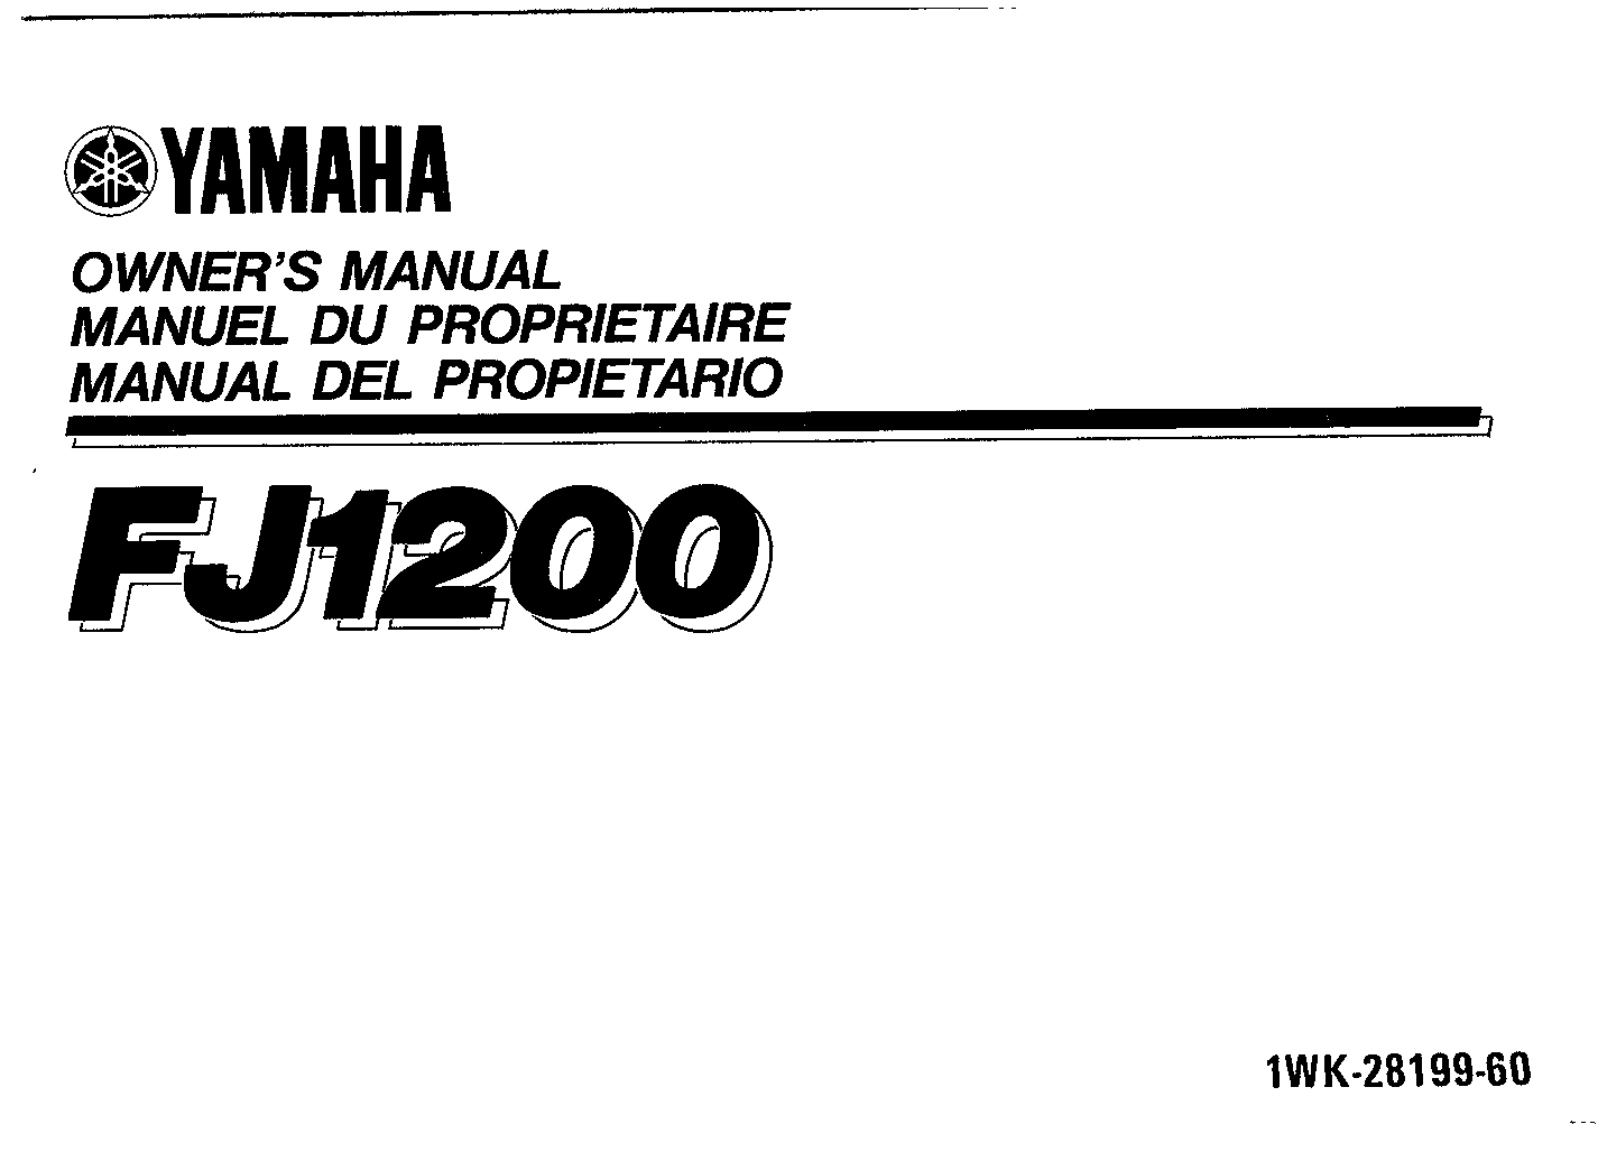 Yamaha FJ1200 Manual